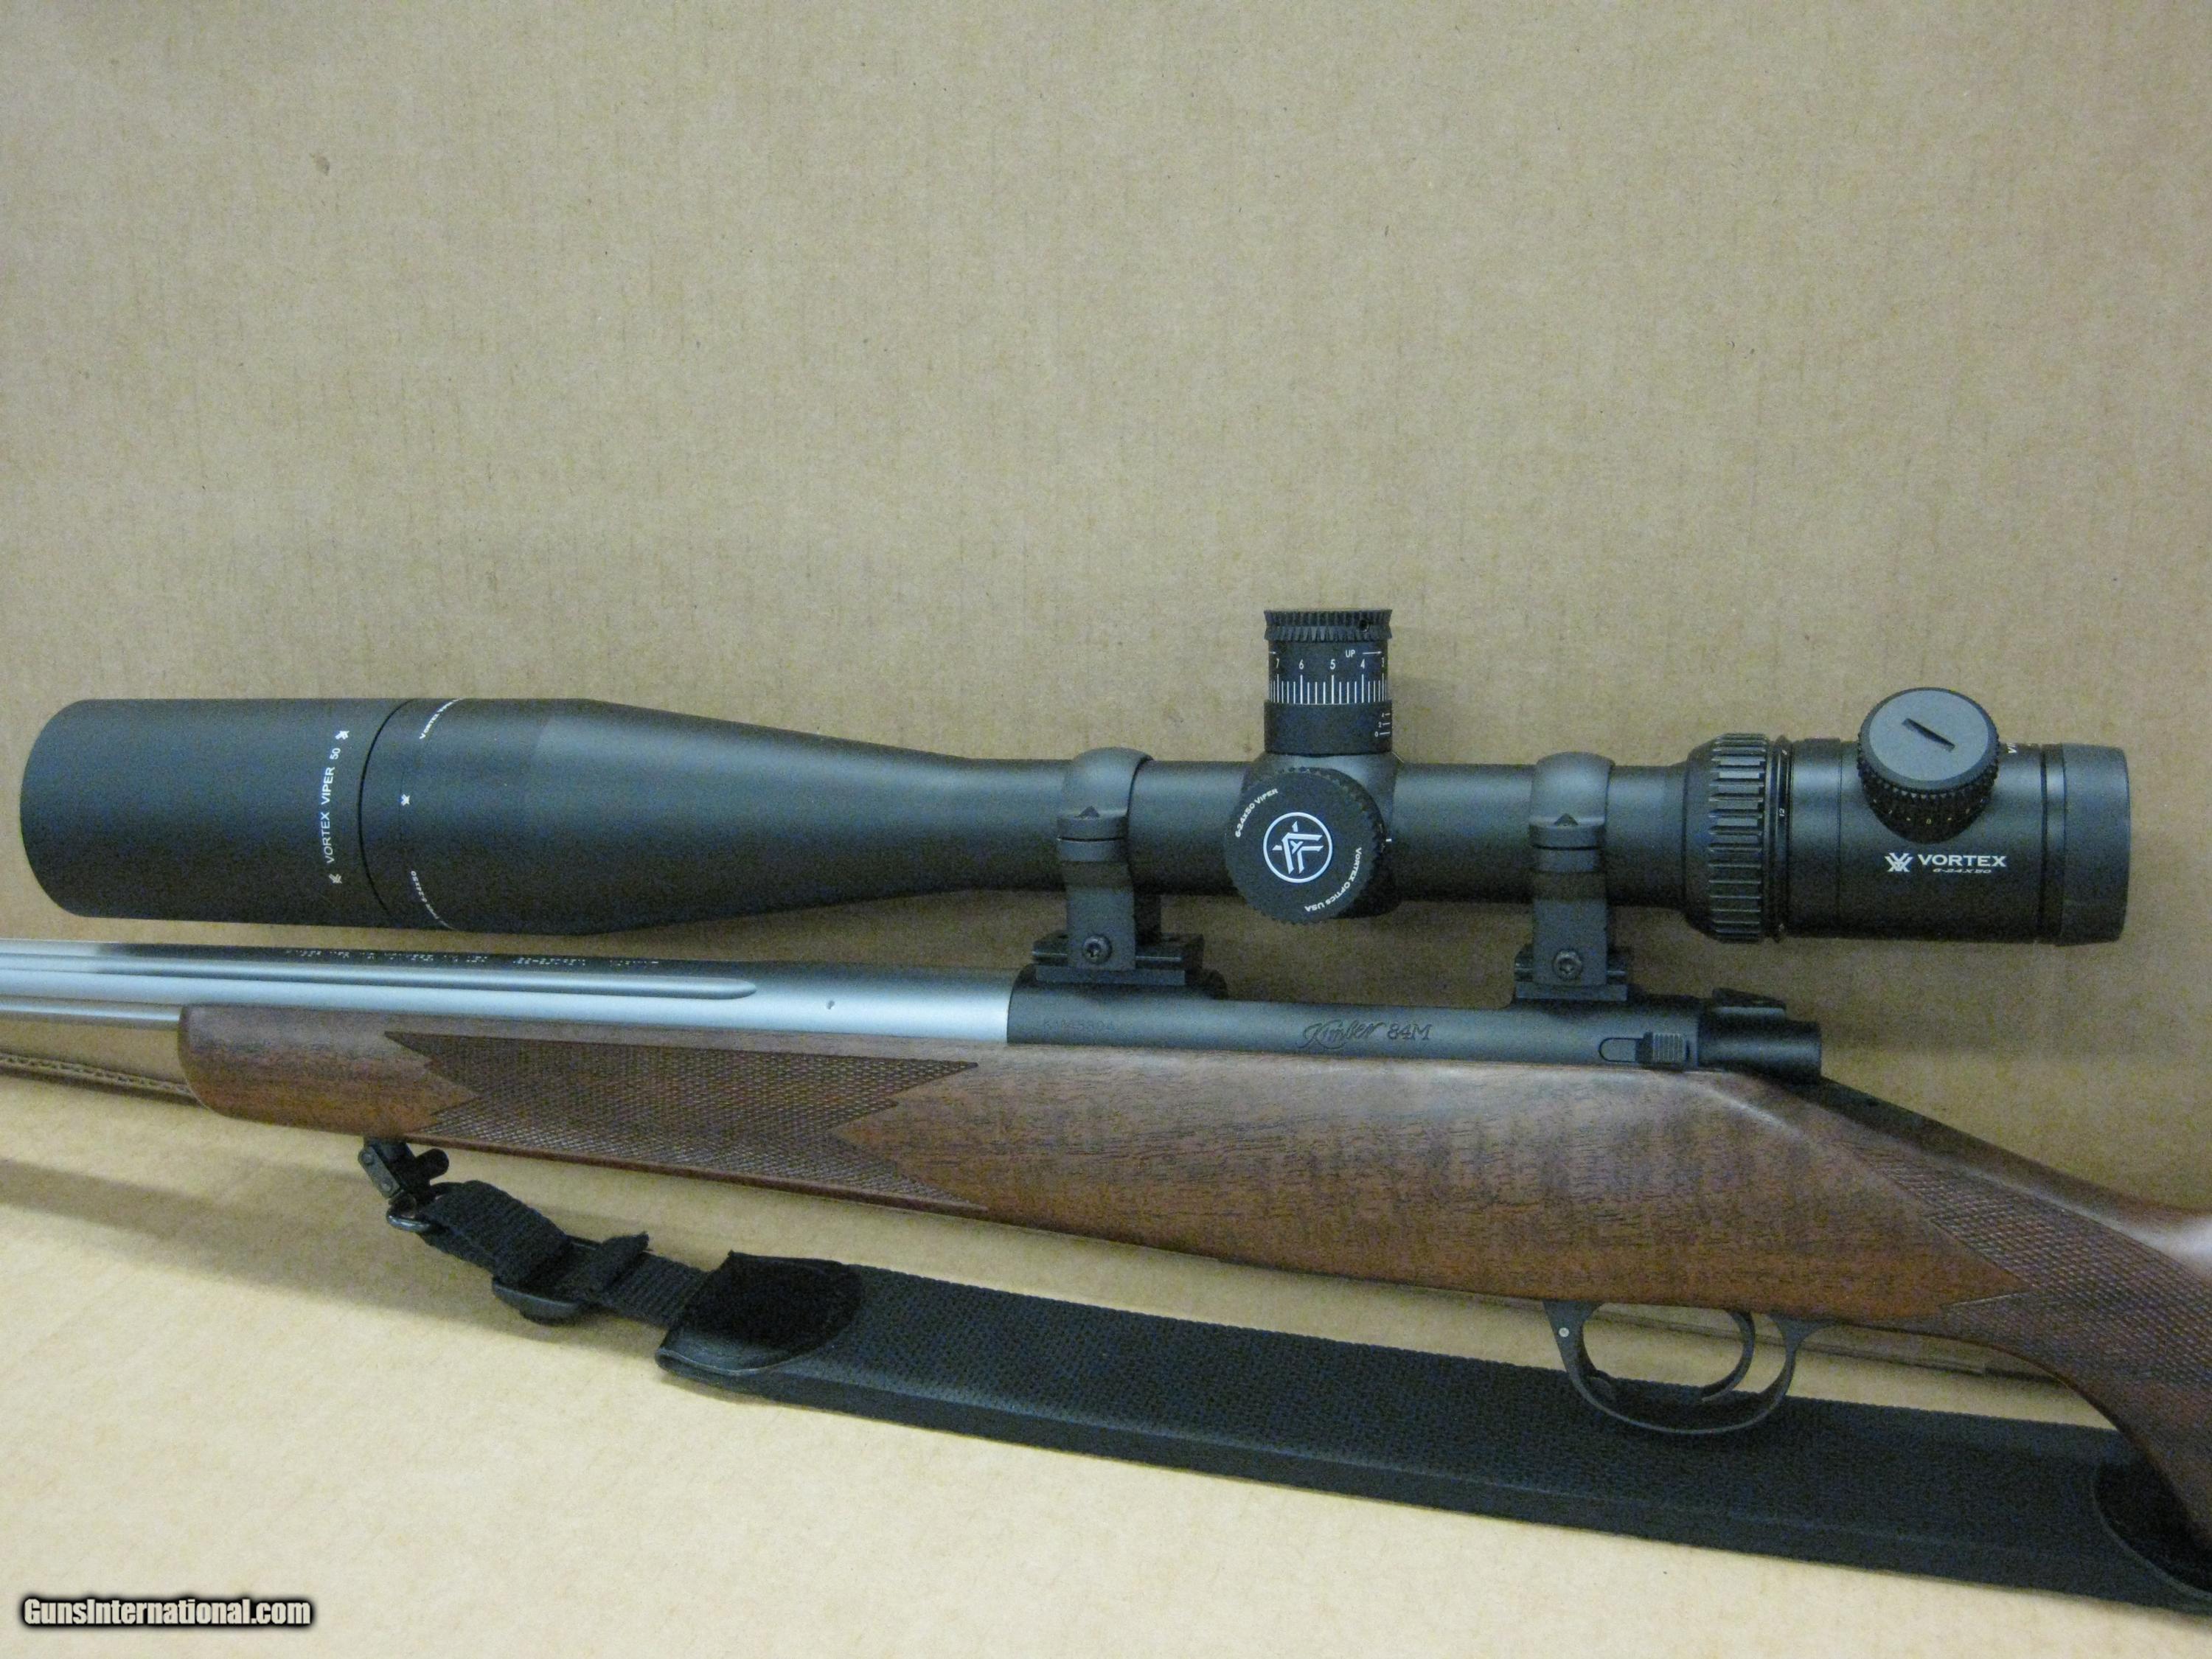 Best Varmint Rifles 22 250